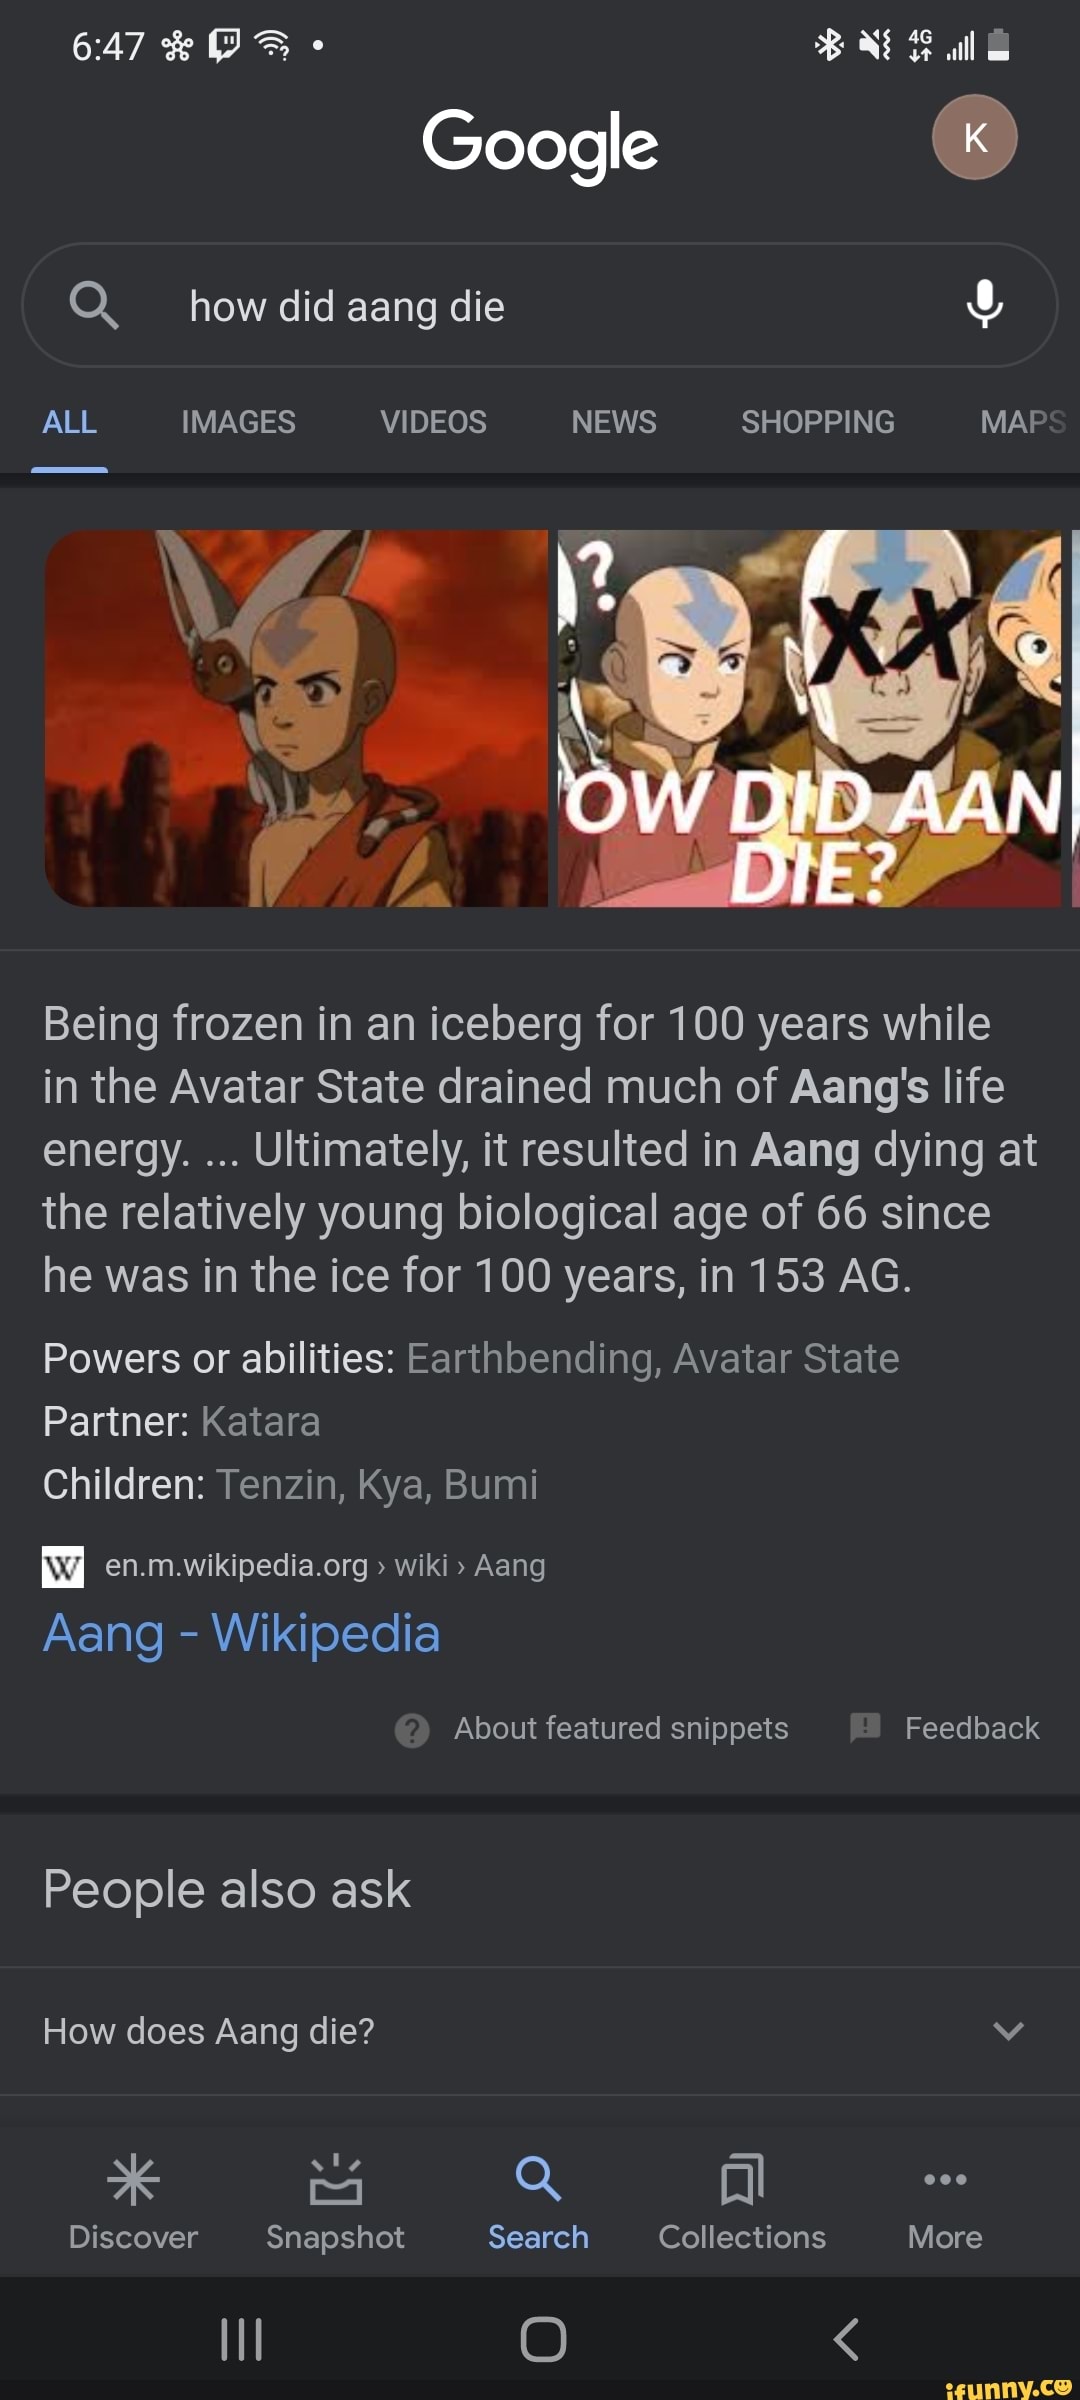 Aang - Wikipedia